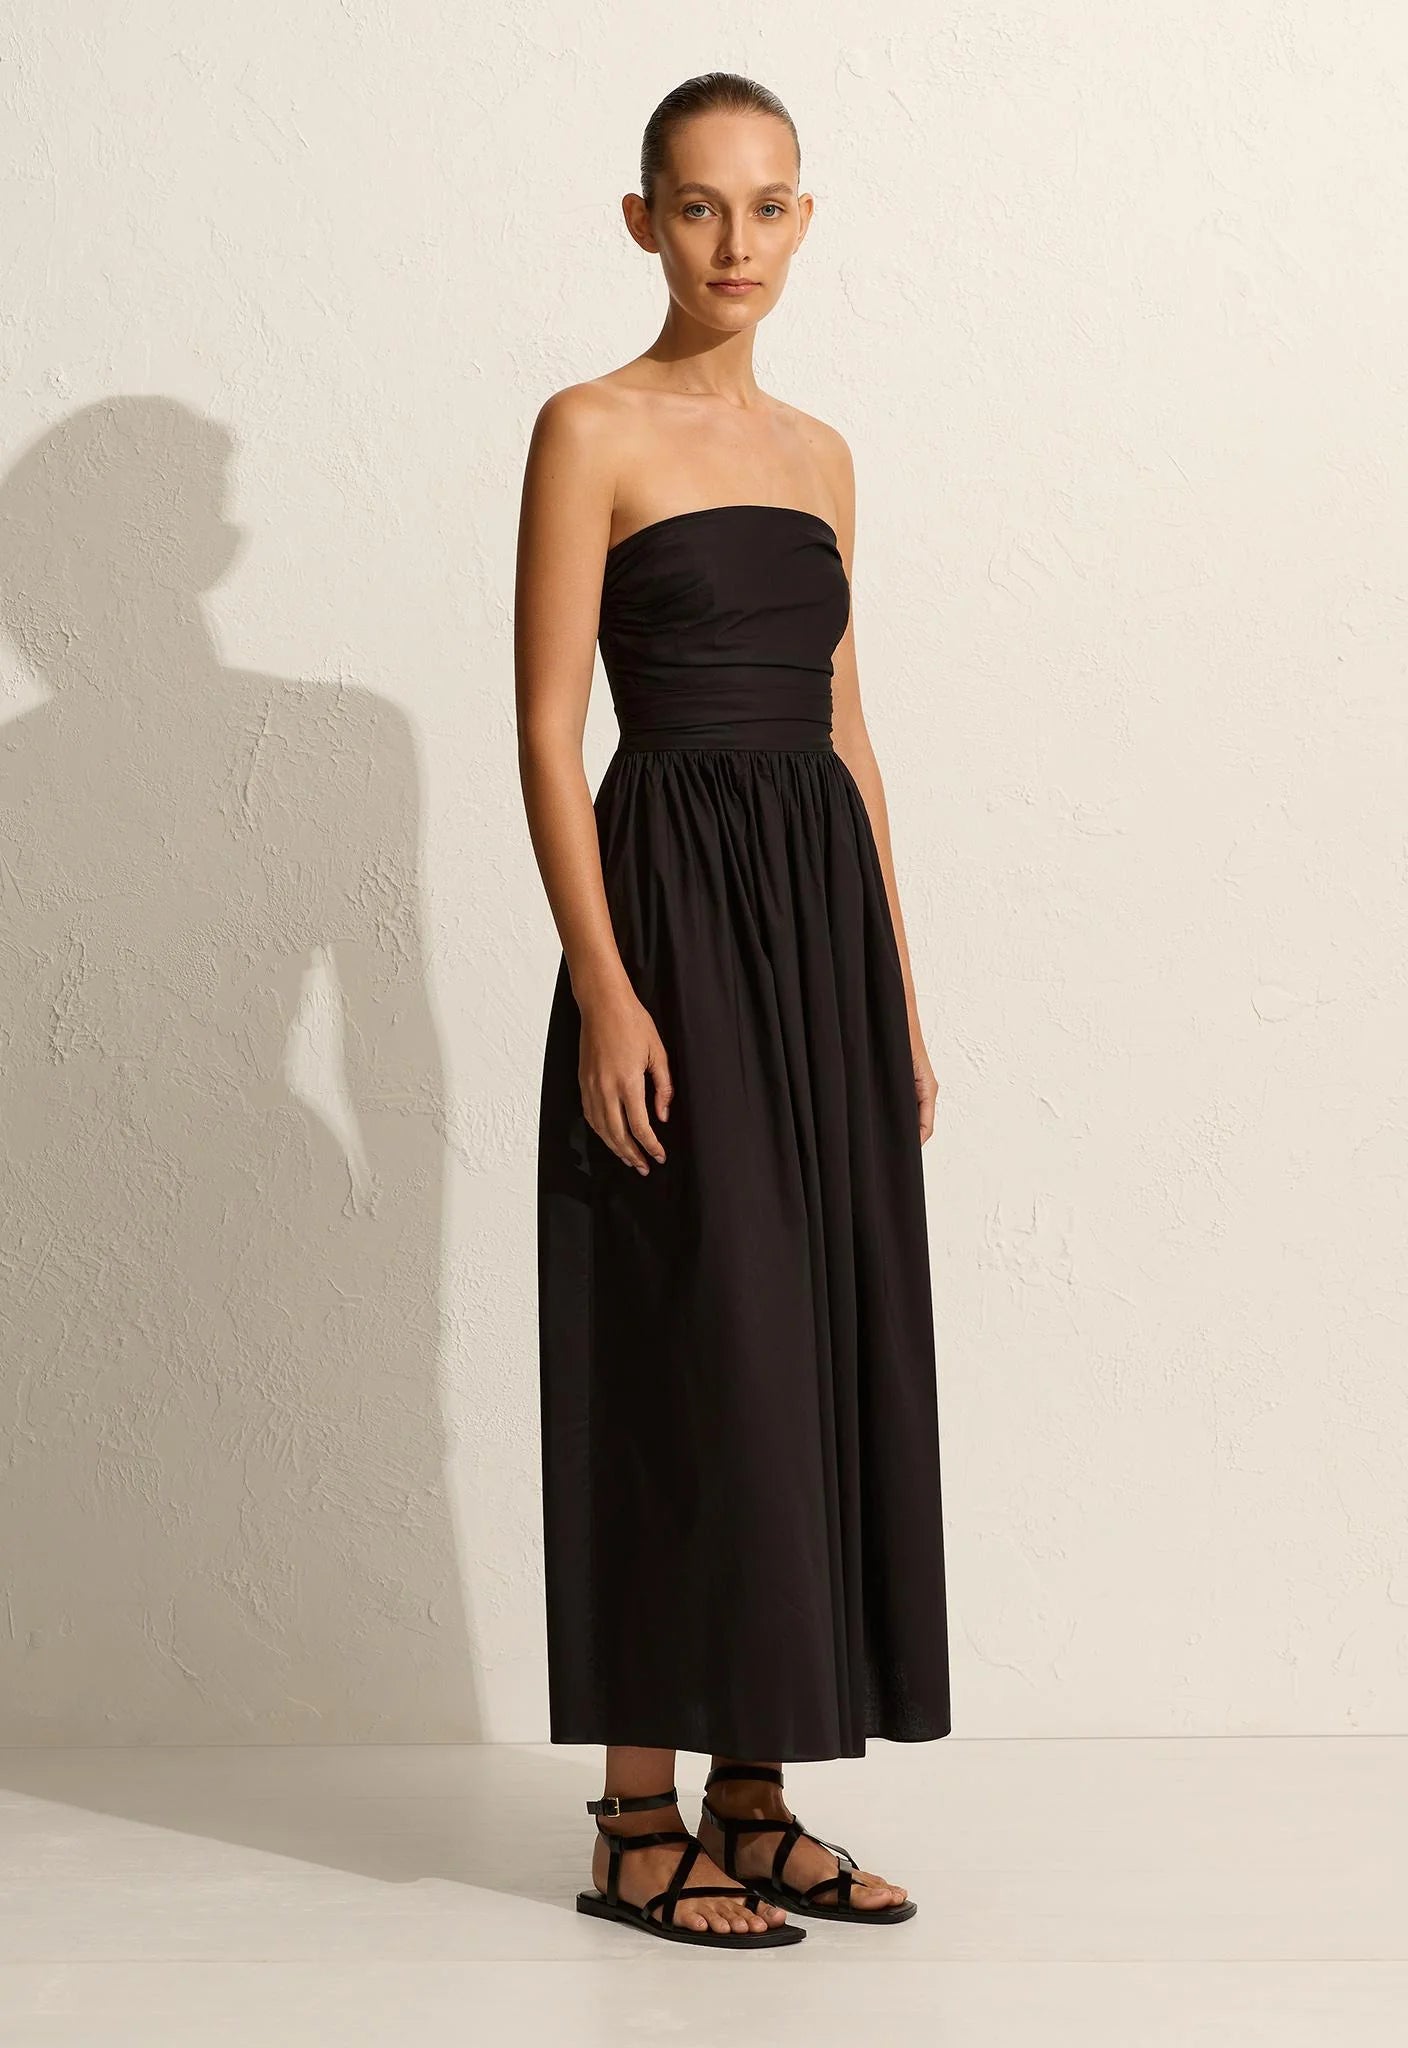 Matteau Strapless Lace Up Dress - Black